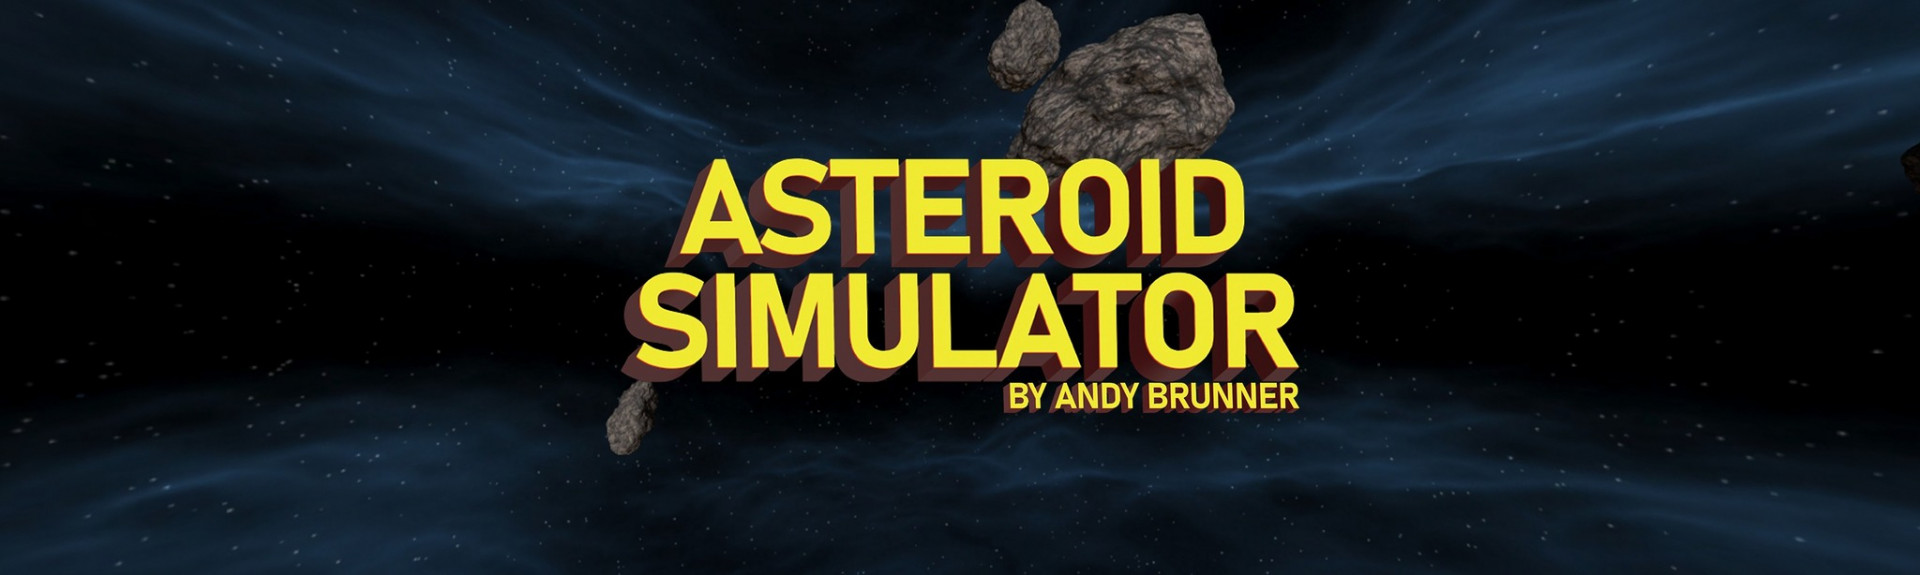 AsteroidSimulator